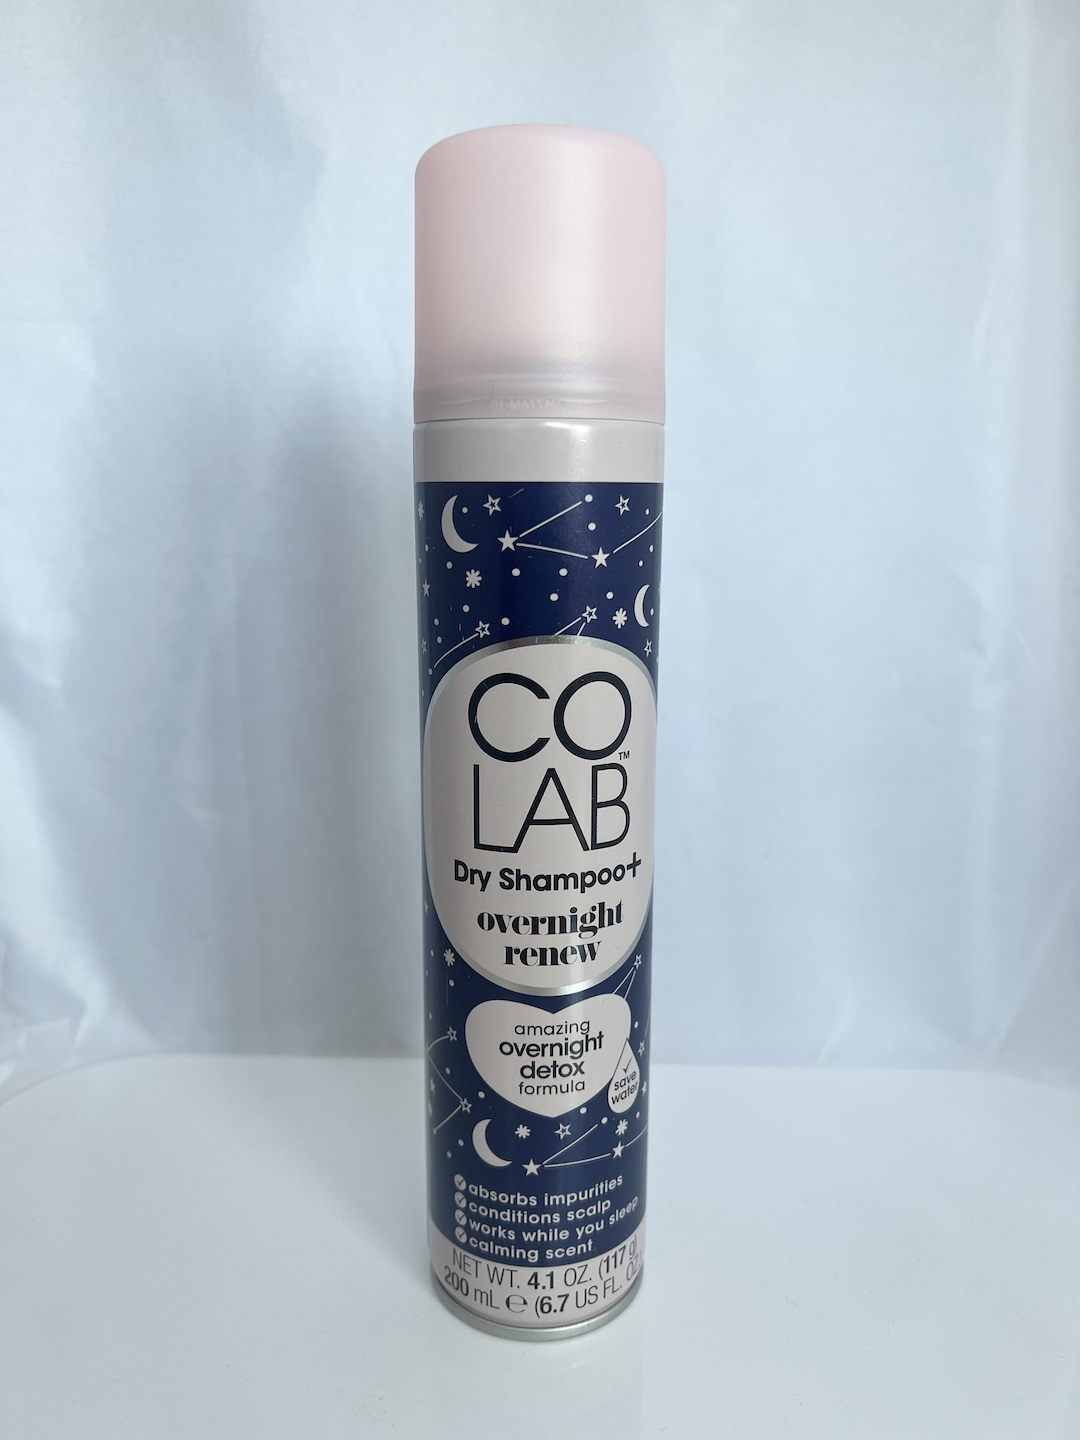 COLAB Dry Shampoo+ overnight